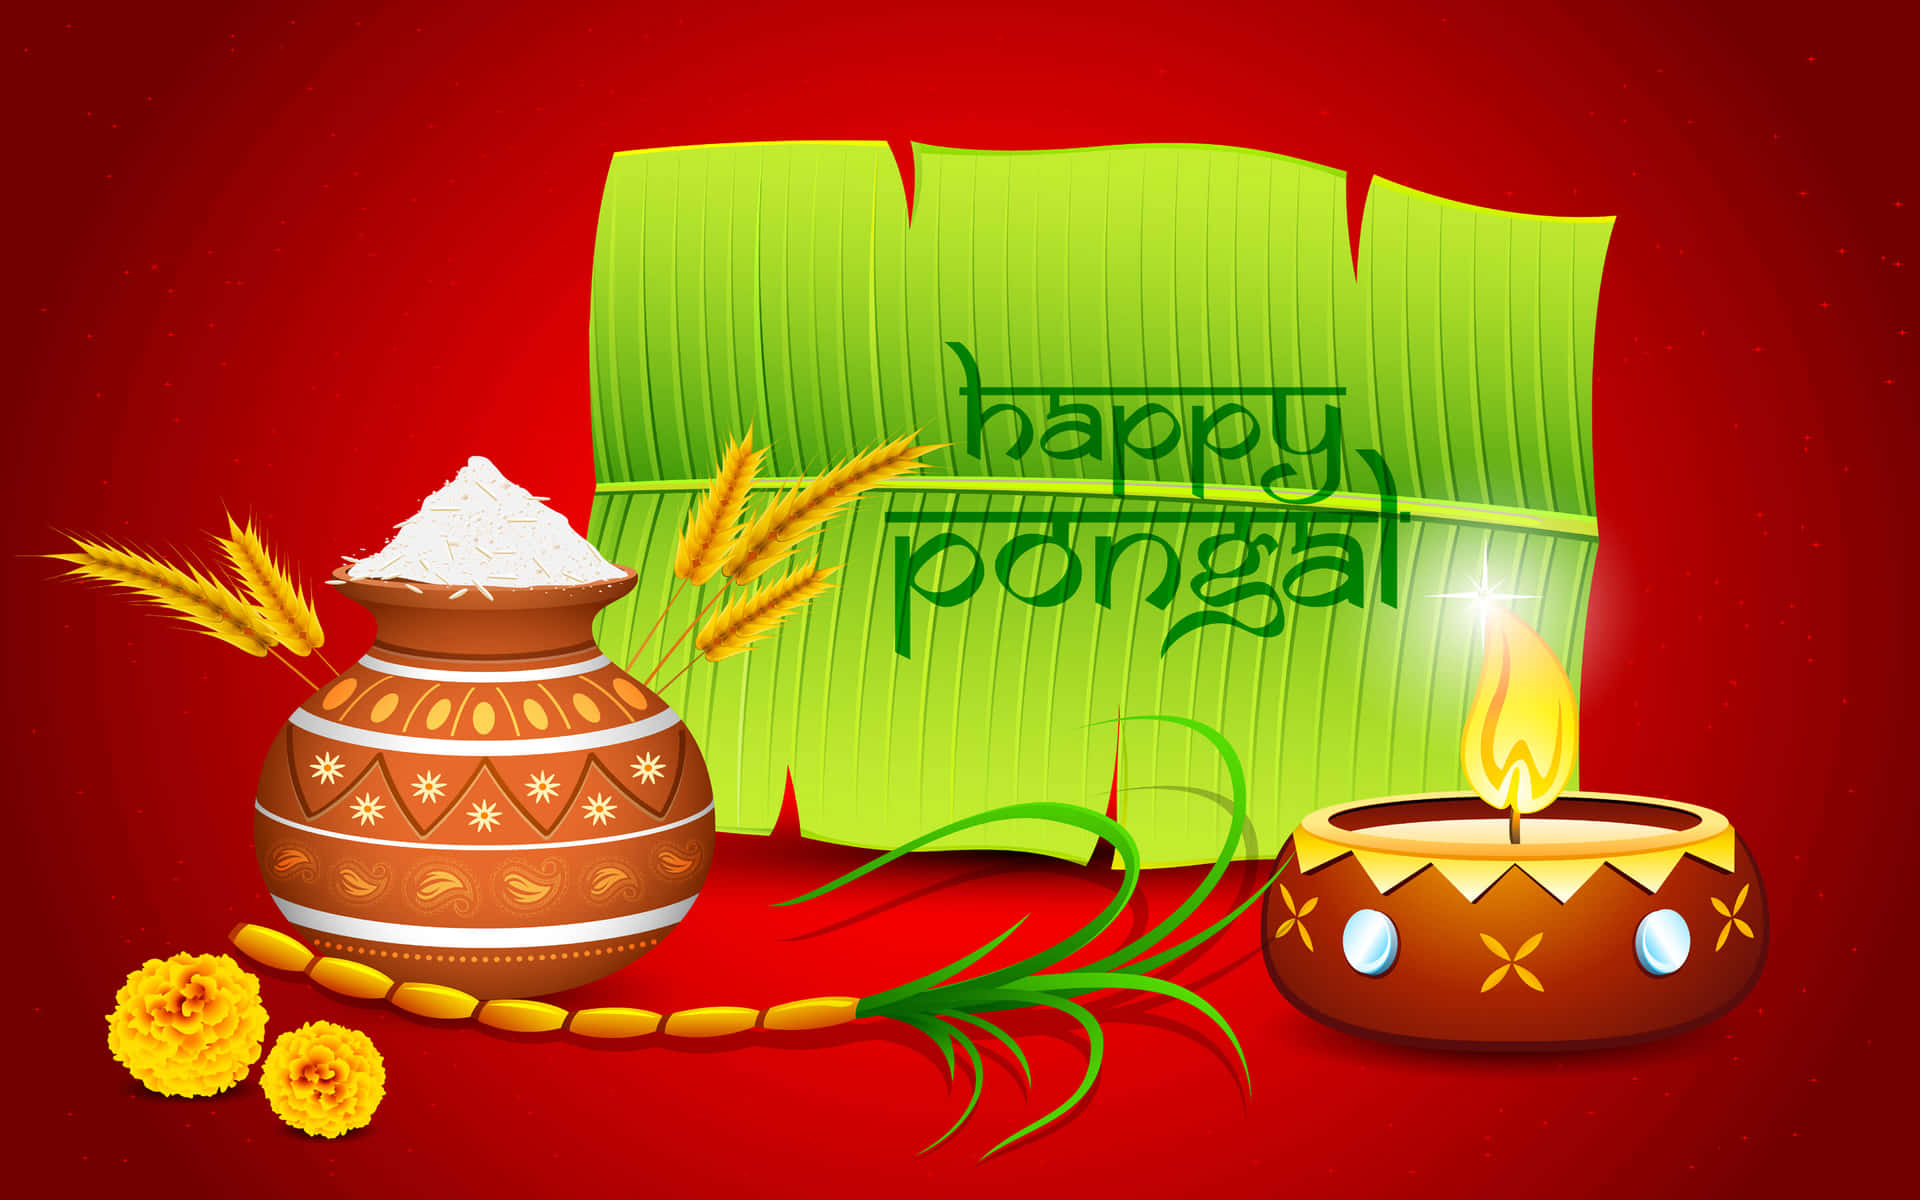 Önskardig En Glad Pongal!